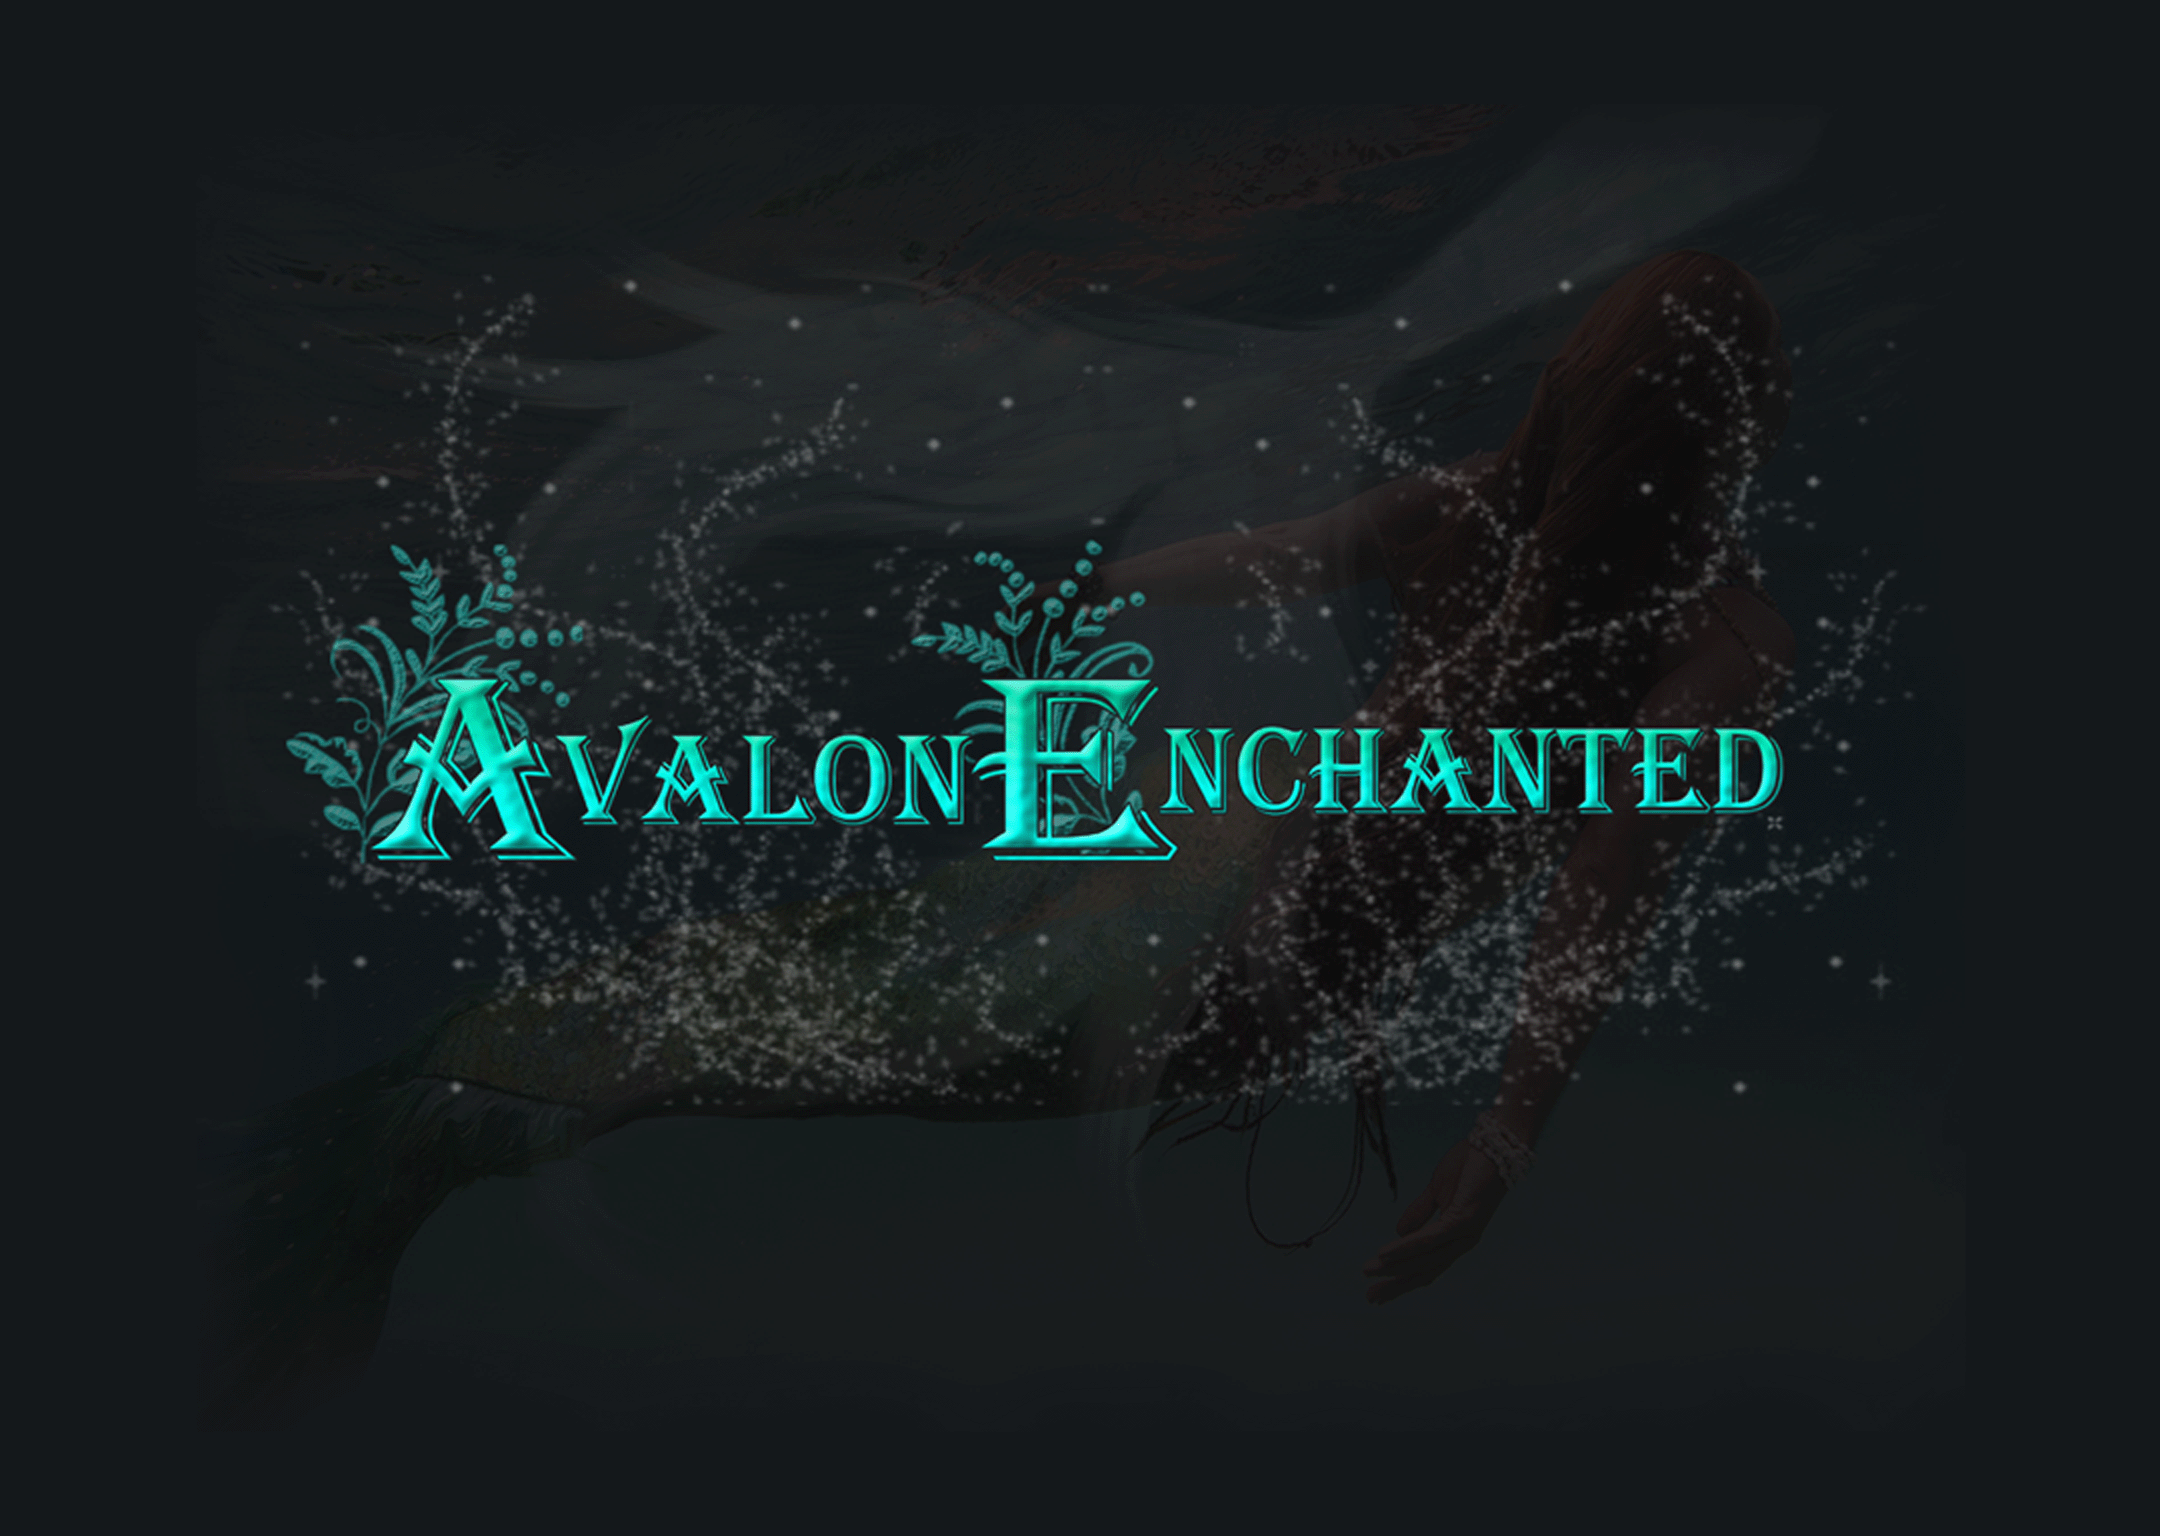 Avalon Enchanted